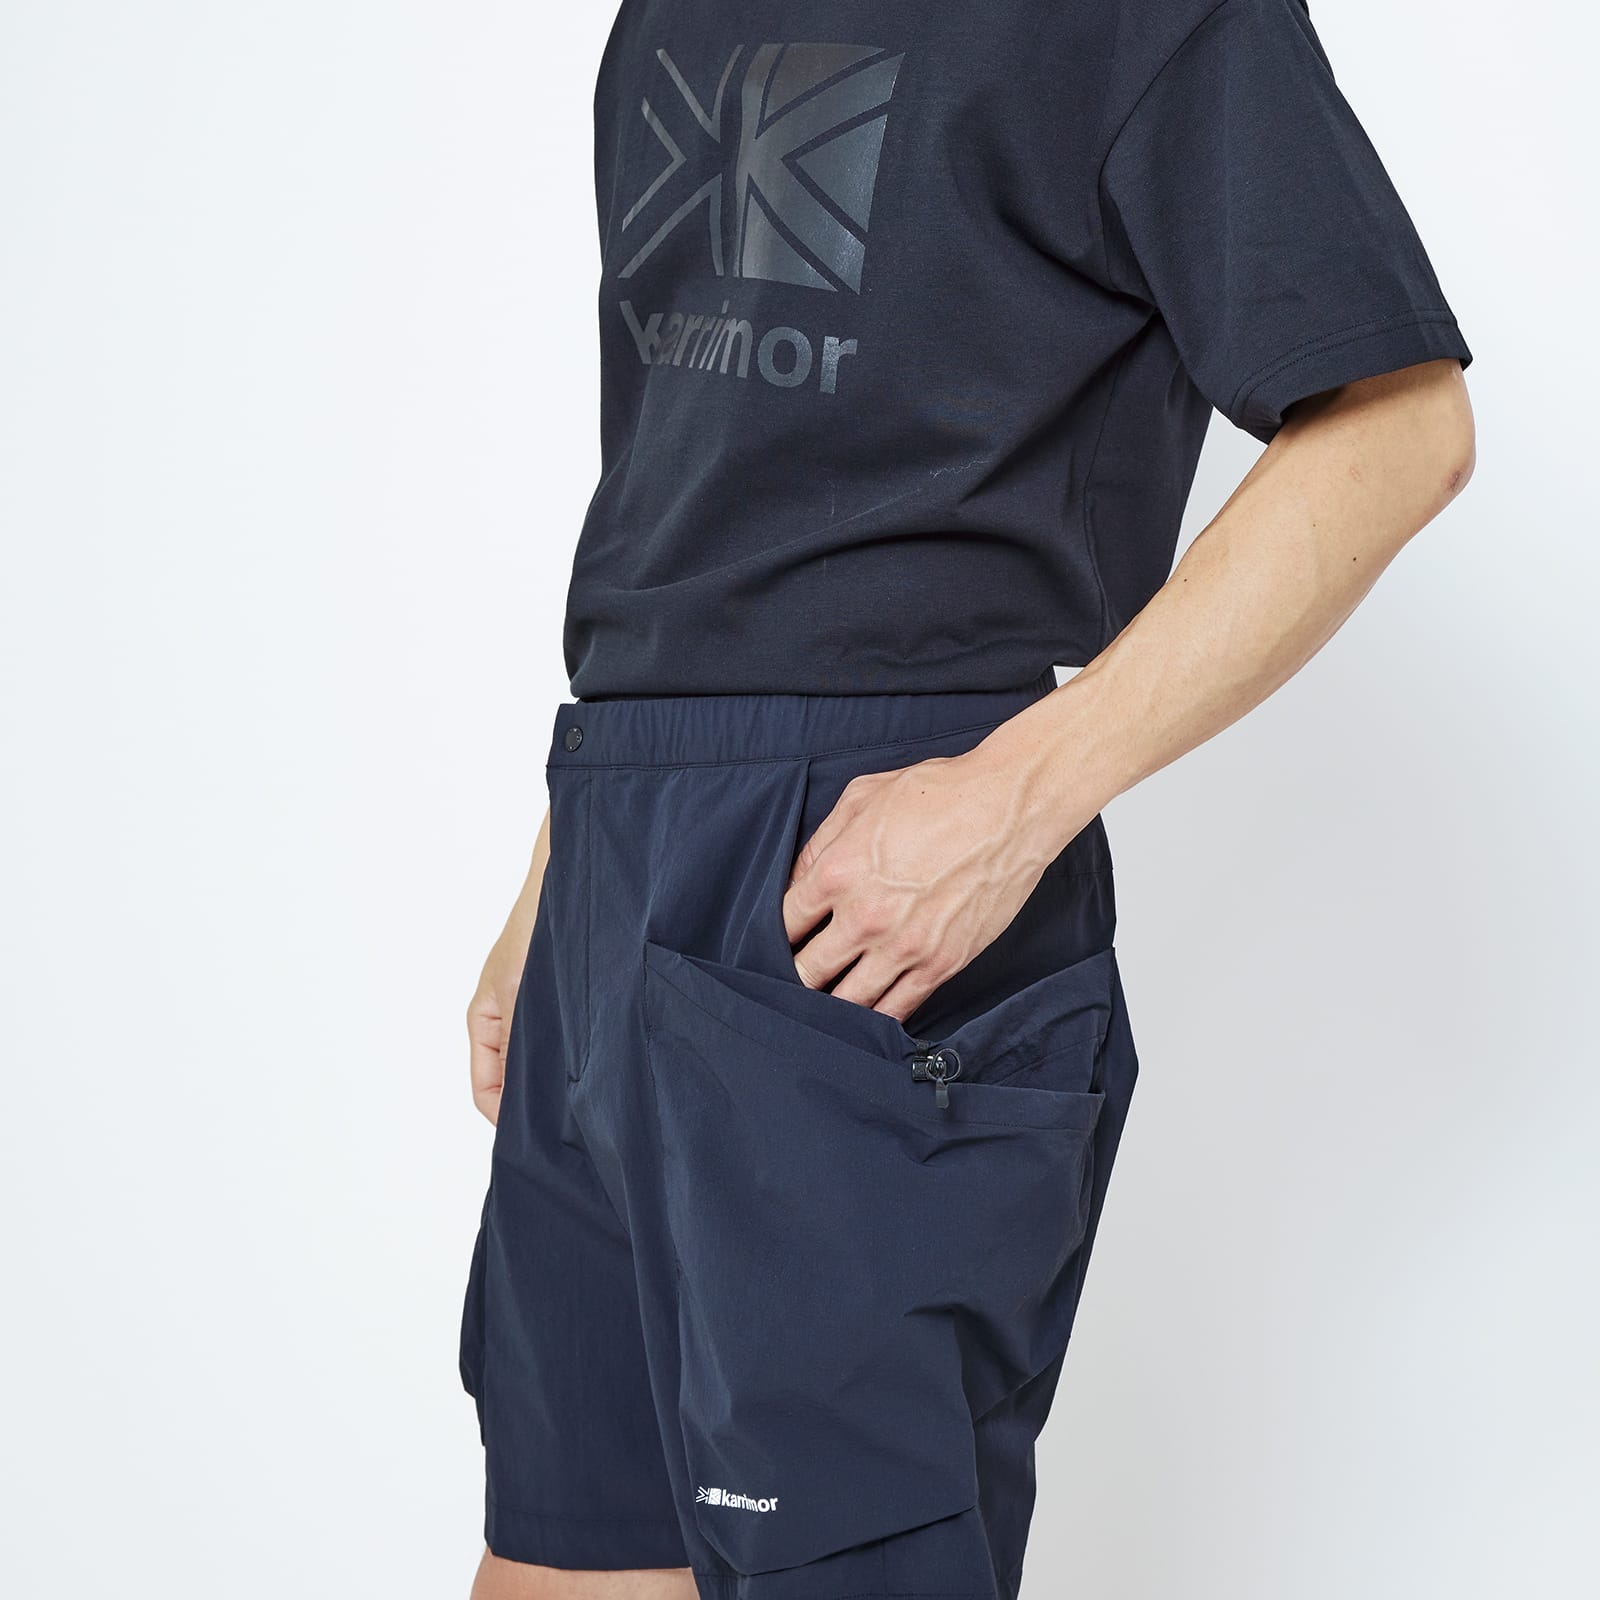 rigg shorts | karrimor カリマー | リュックサック・アウトドアウェア | karrimor official site